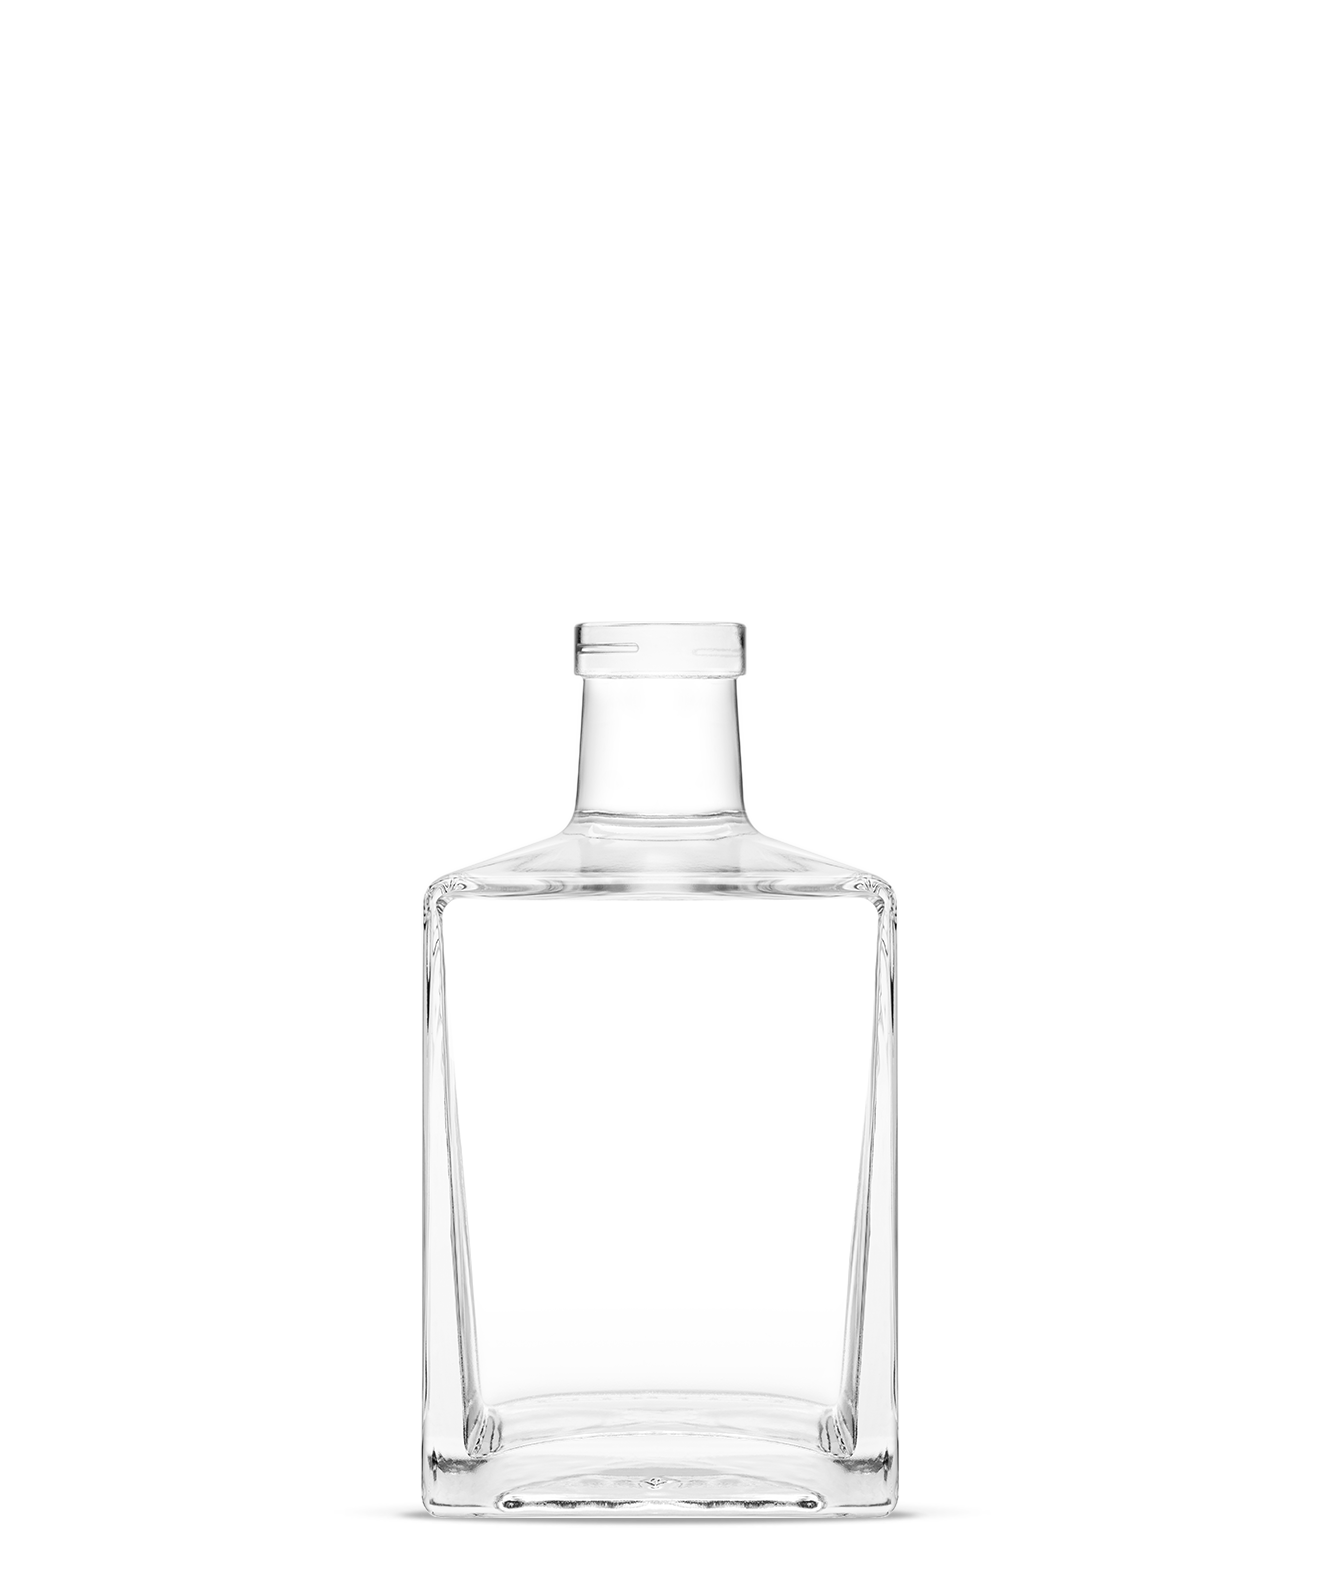 pamela-eco-fragrances-parfumsambiance-vetroelite-view